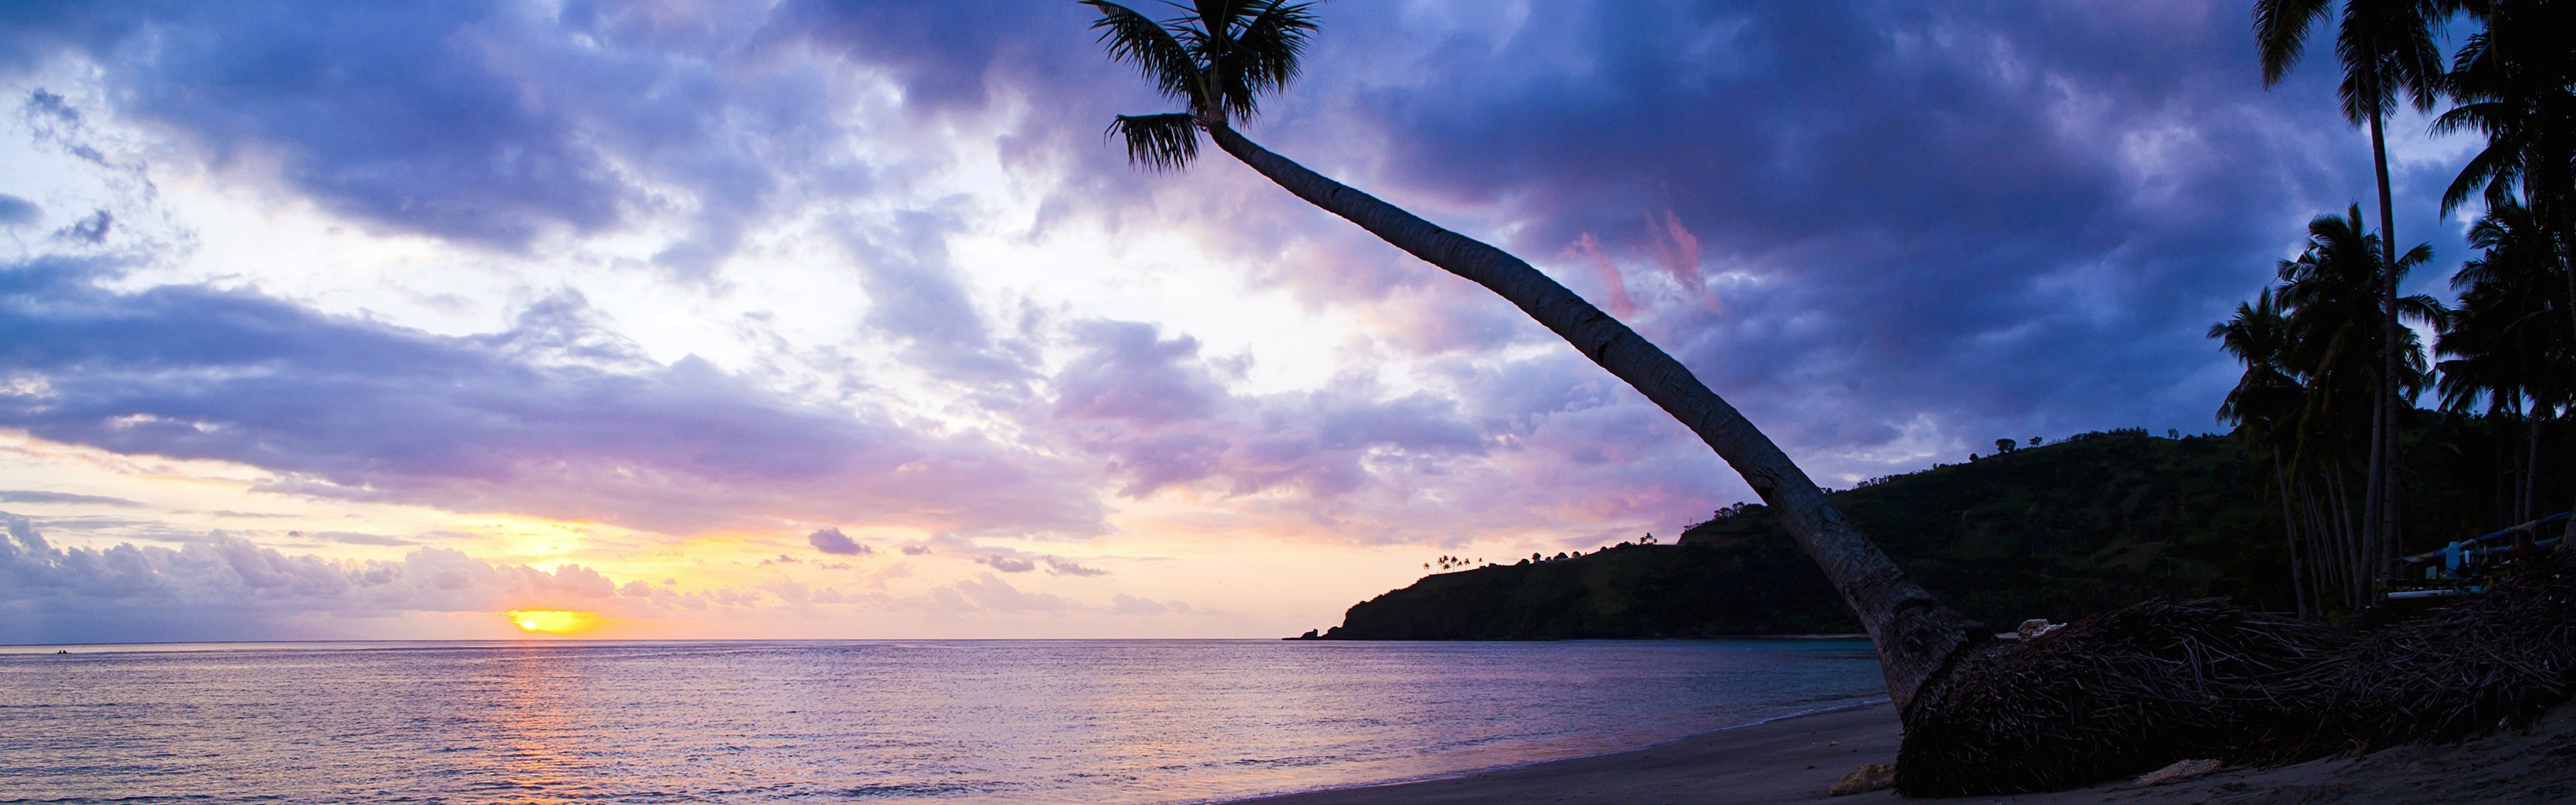 3840x1200 Beautiful beach sunset, Windows 8 panoramic widescreen wallpapers #8 -  .